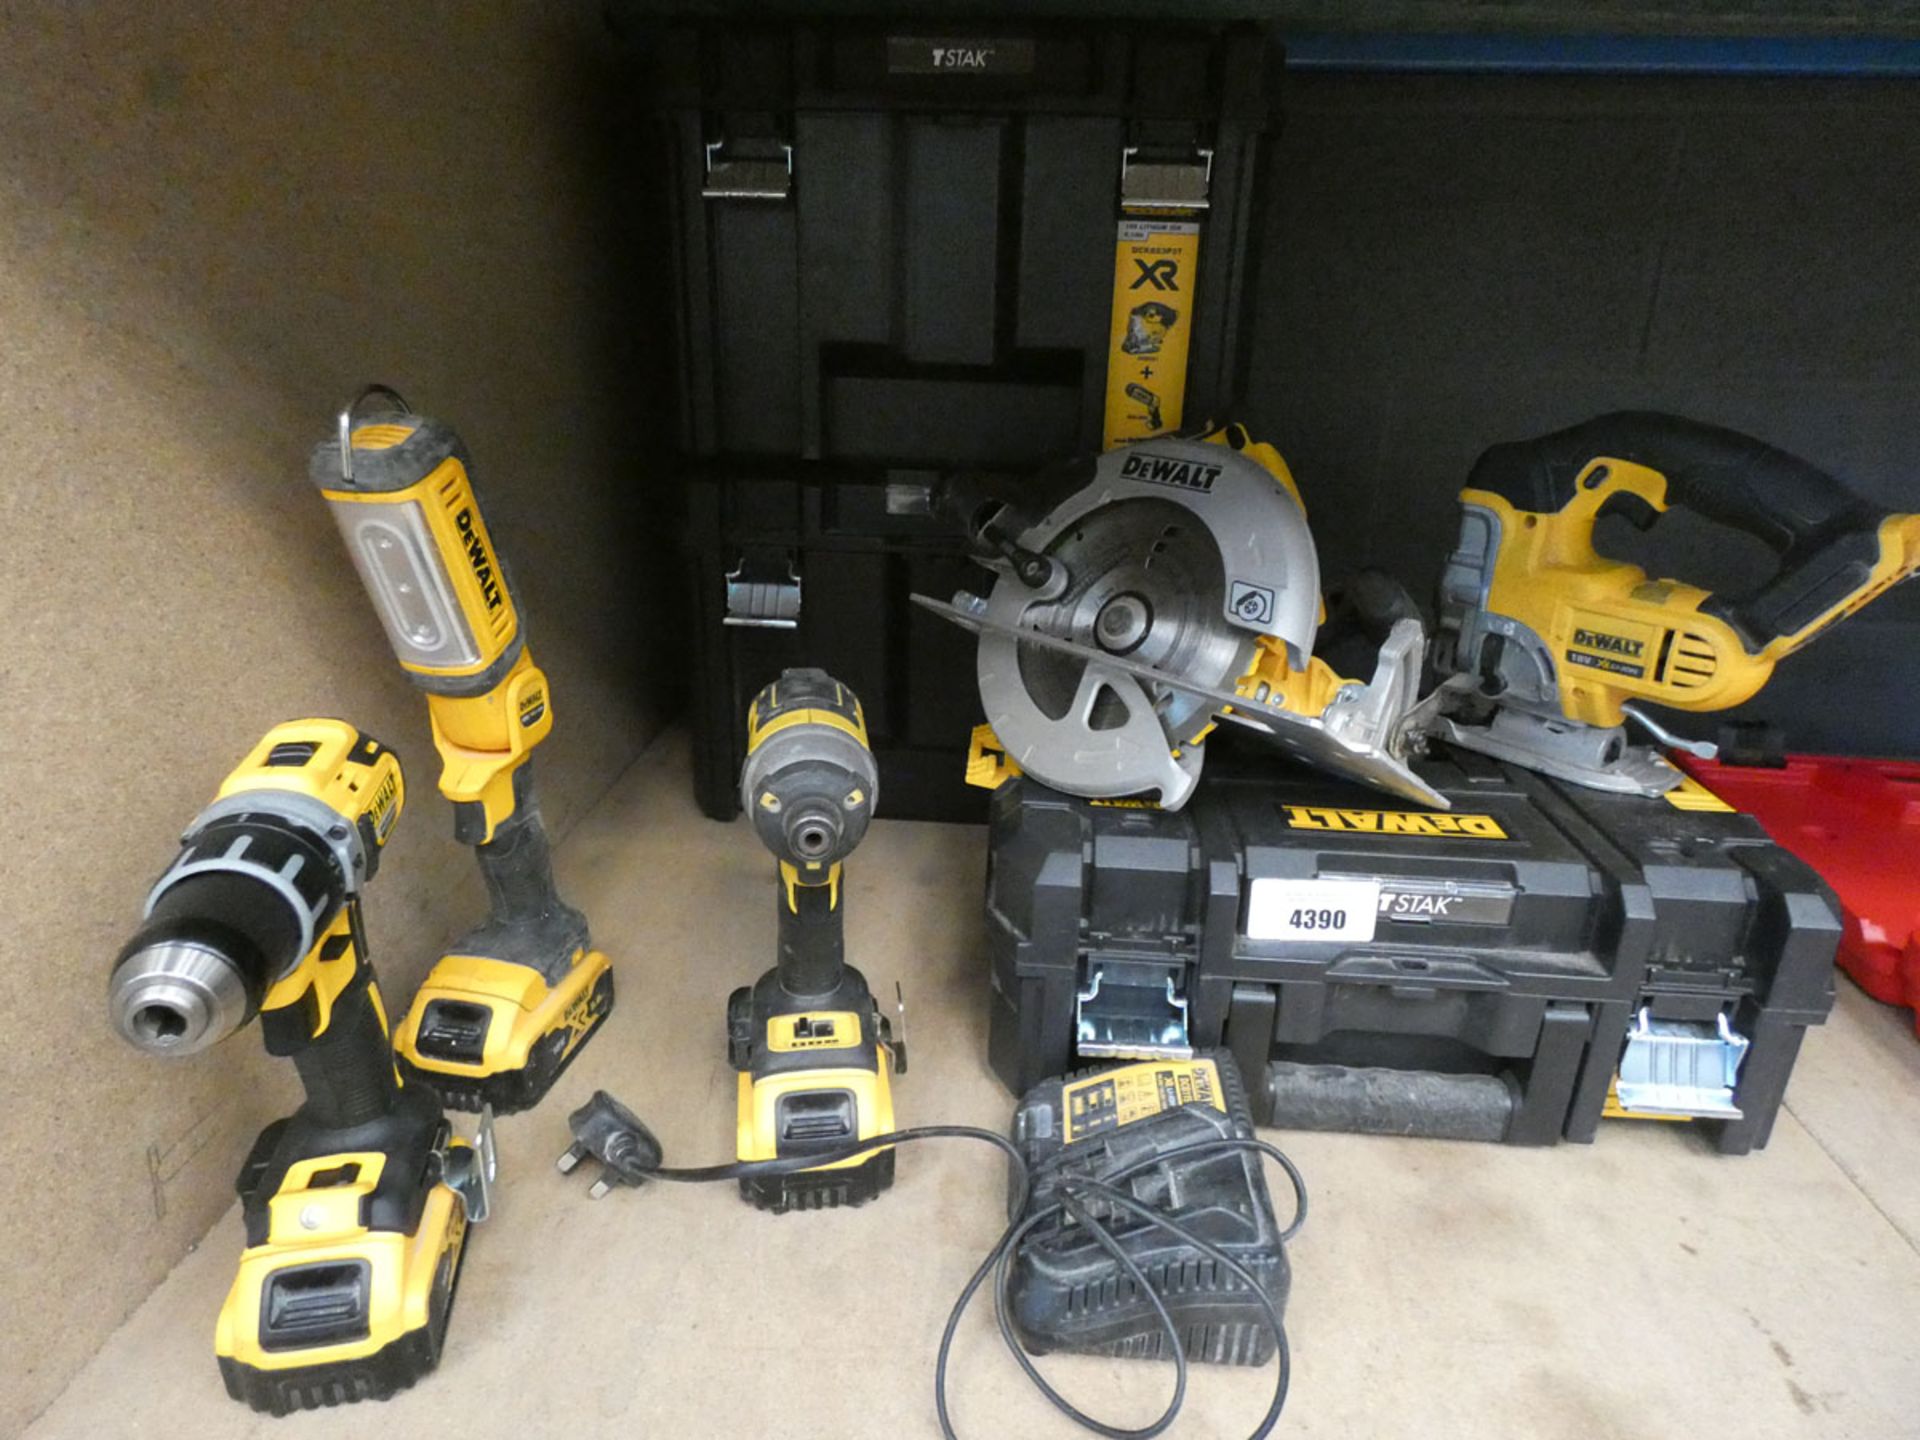 Dewalt tool kit consisting of drill, impact driver, torch, circular saw, jigsaw, 3 batteries and